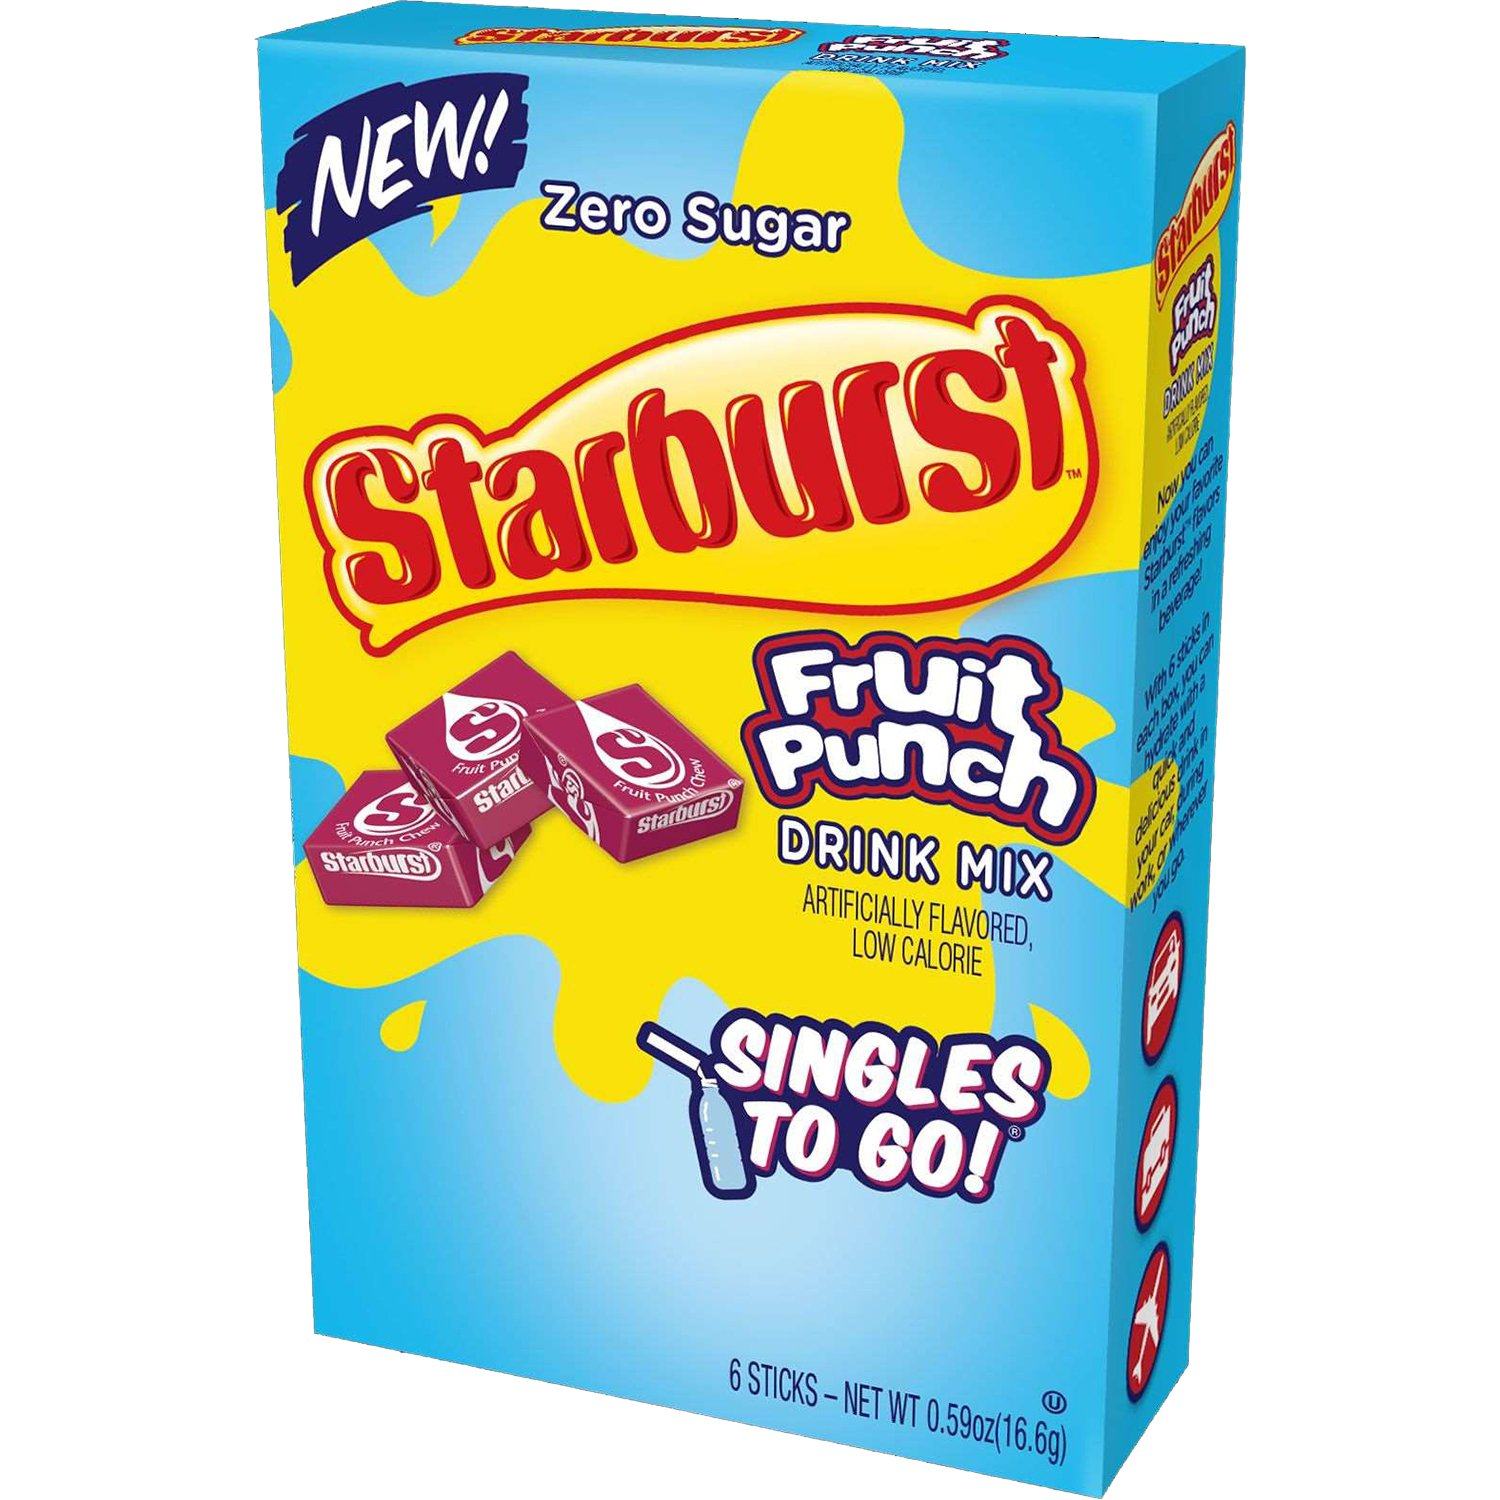 Starburst Singles to Go Drink Mix Starburst Fruit Punch 6 Sticks 